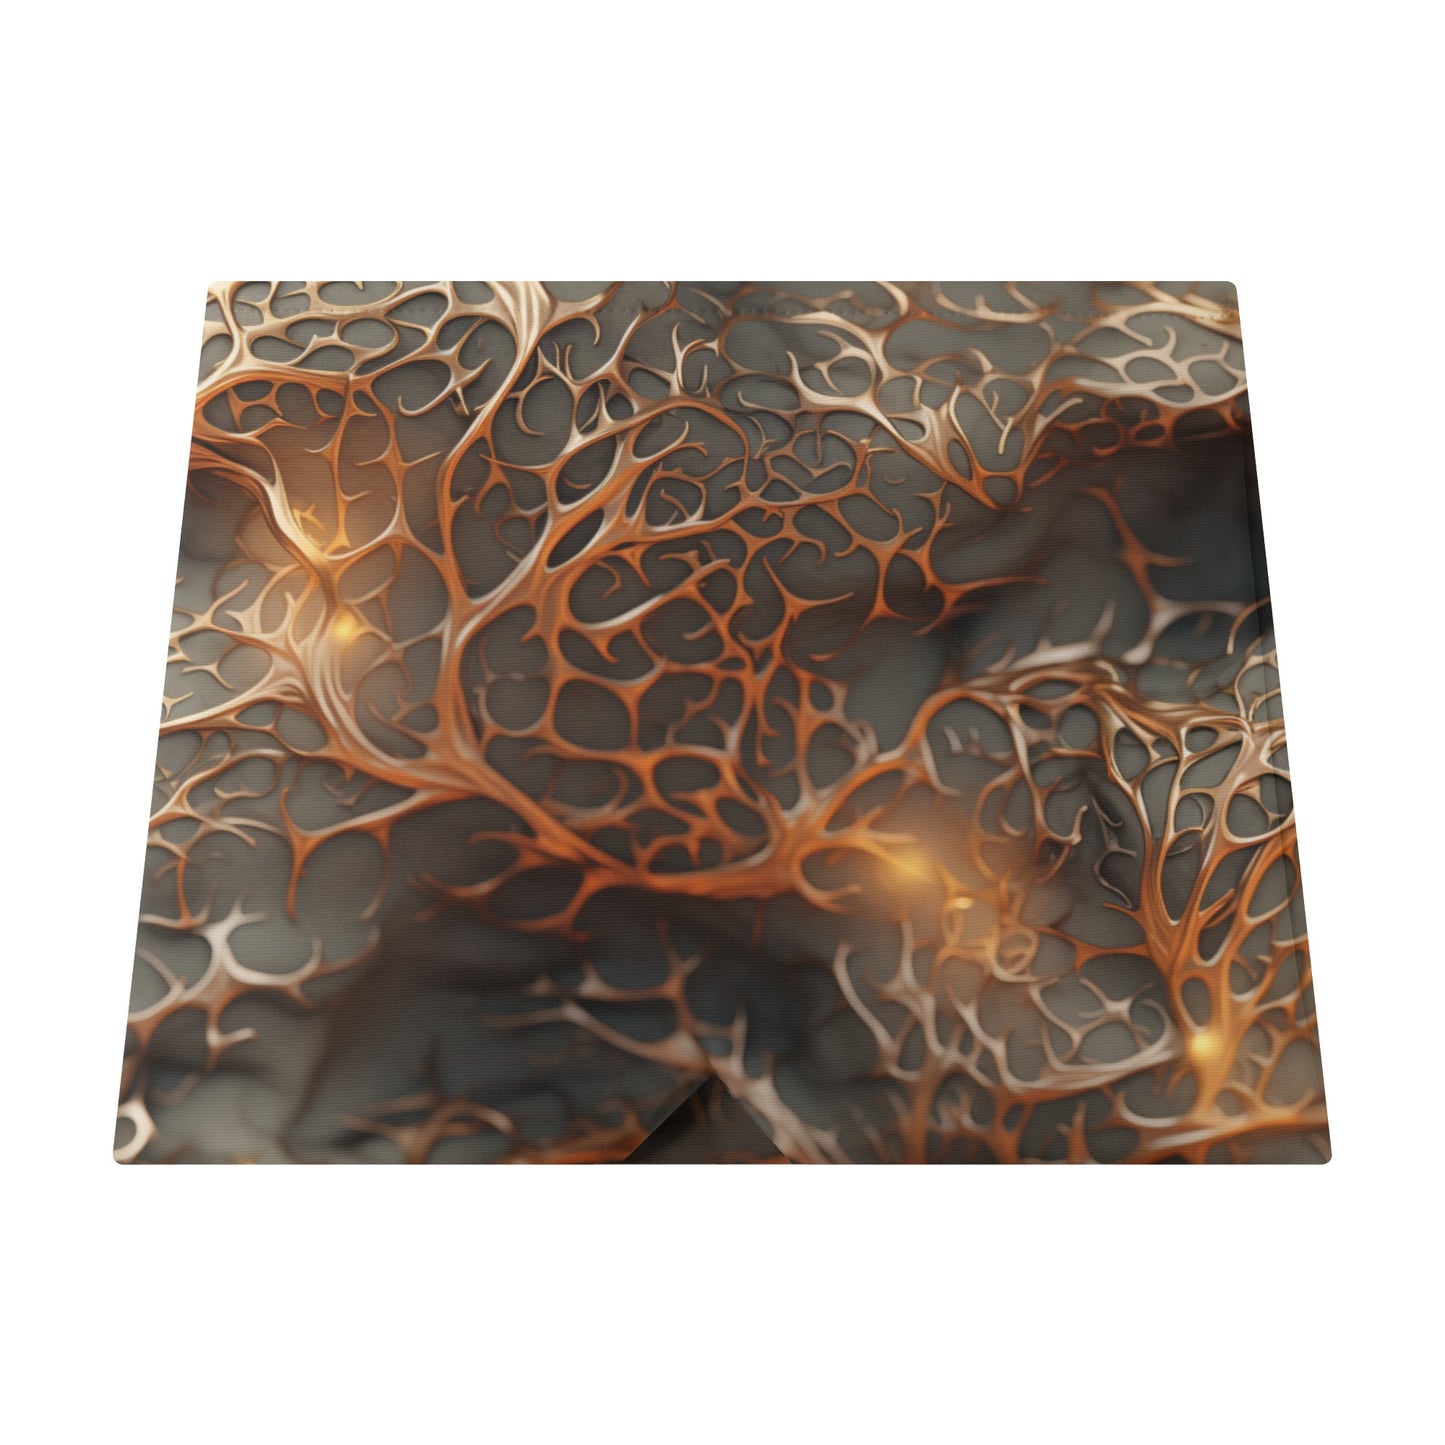 Neduz Designs Artified Collection - Copper Grunge Ice Head Wrap